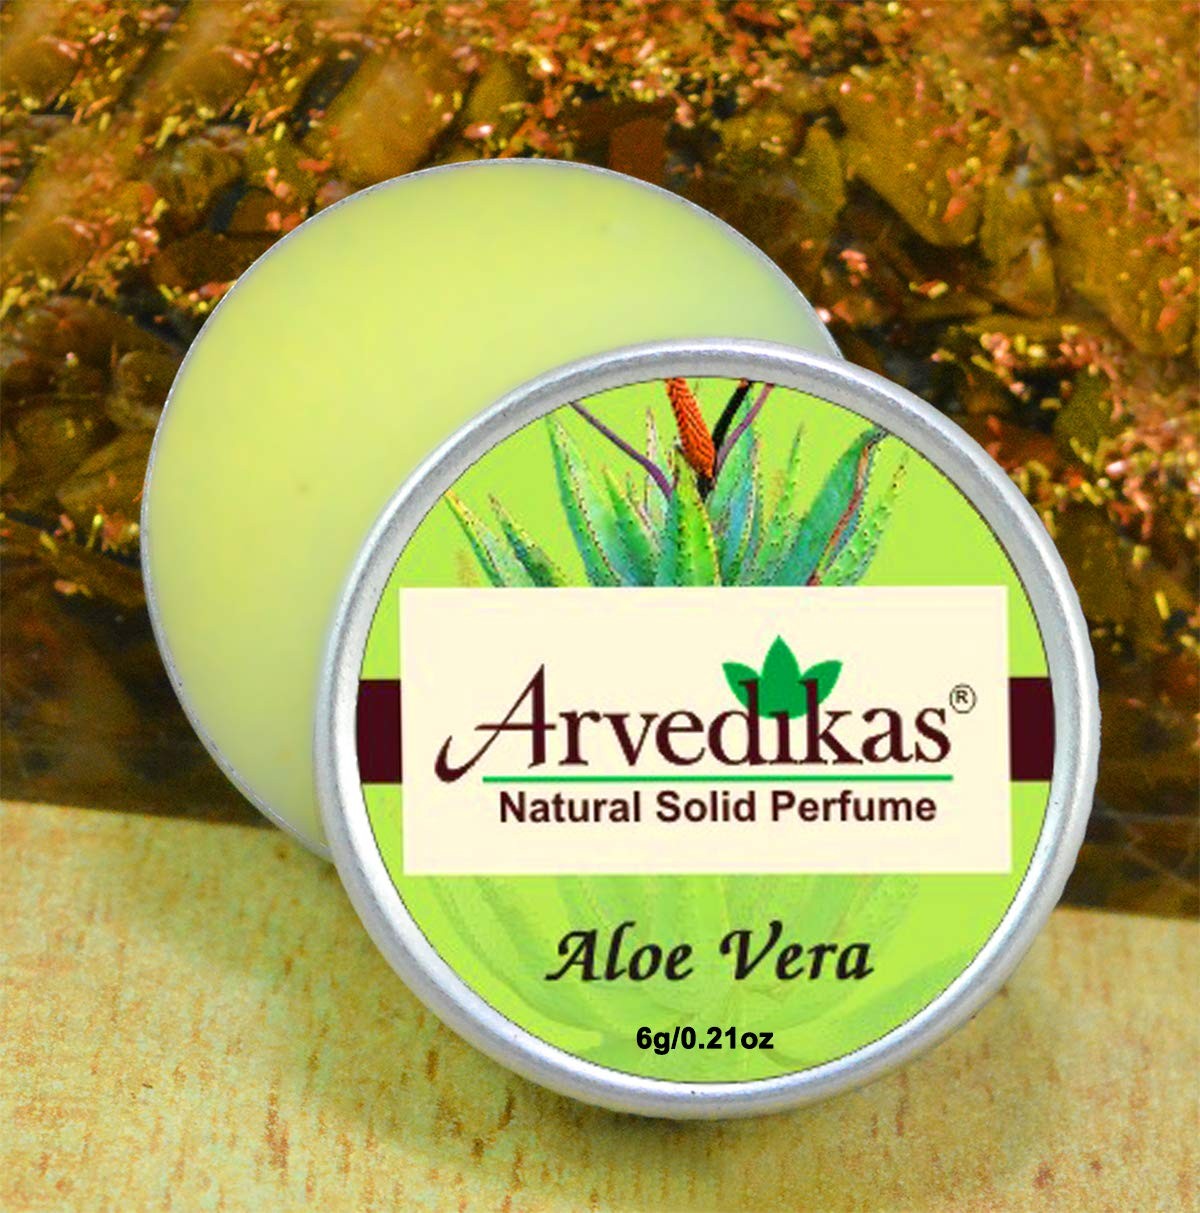 Arvedikas Aloe Vera Natural Solid Perfume Beeswax Body Parfum Gift for Her Women Aromatic Scent